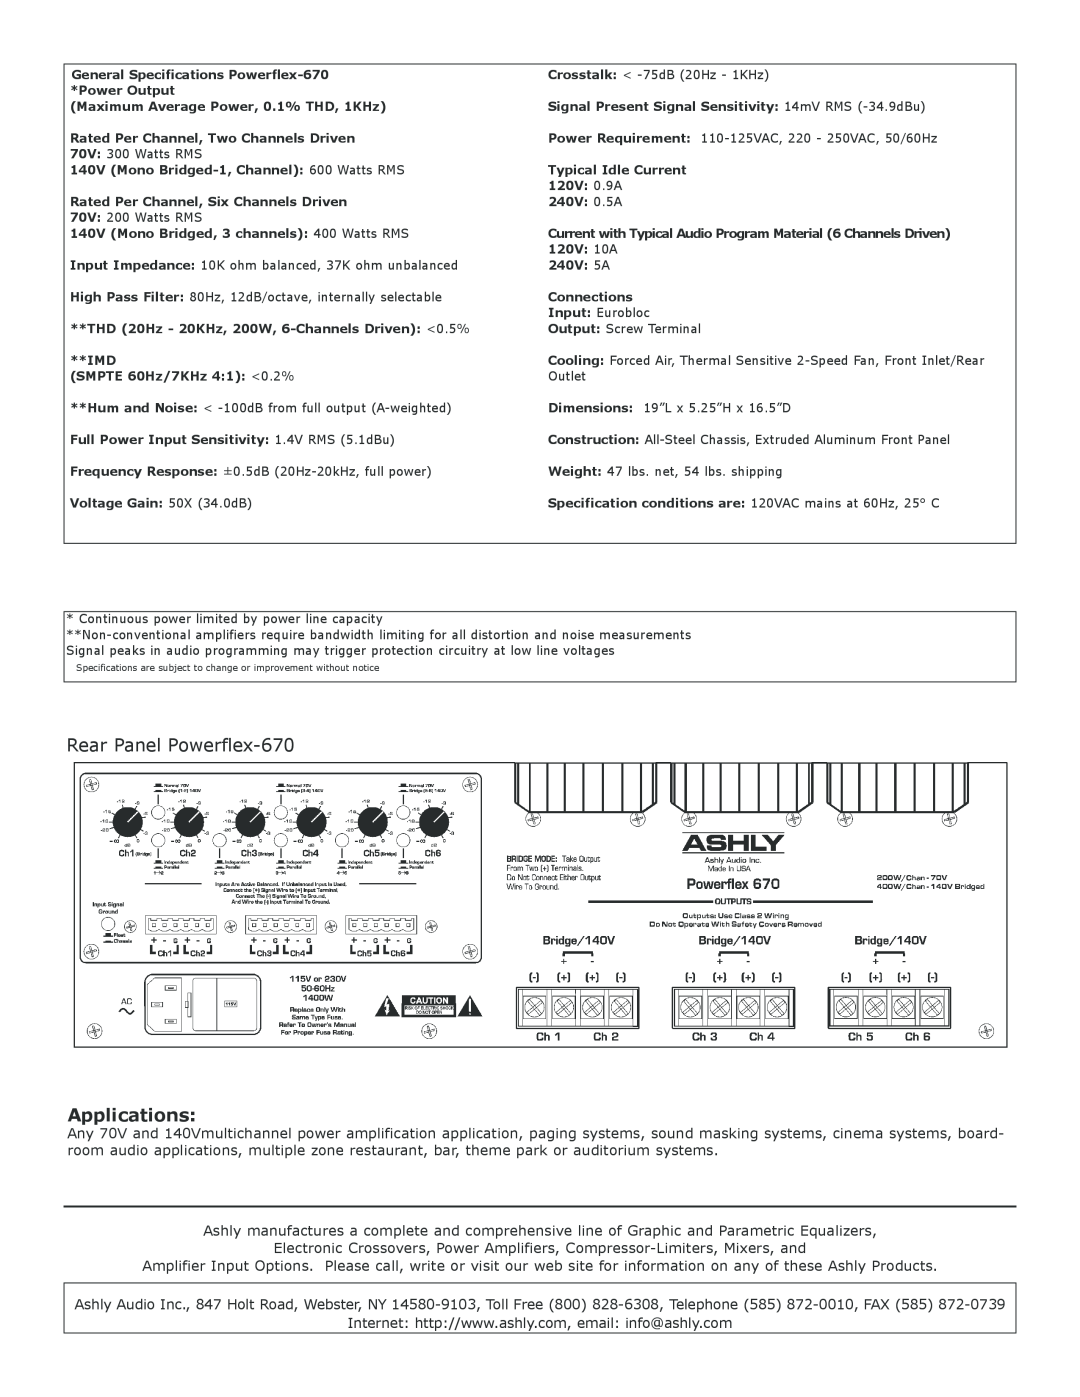 Ashly specifications Applications, Rear Panel Powerflex-670 